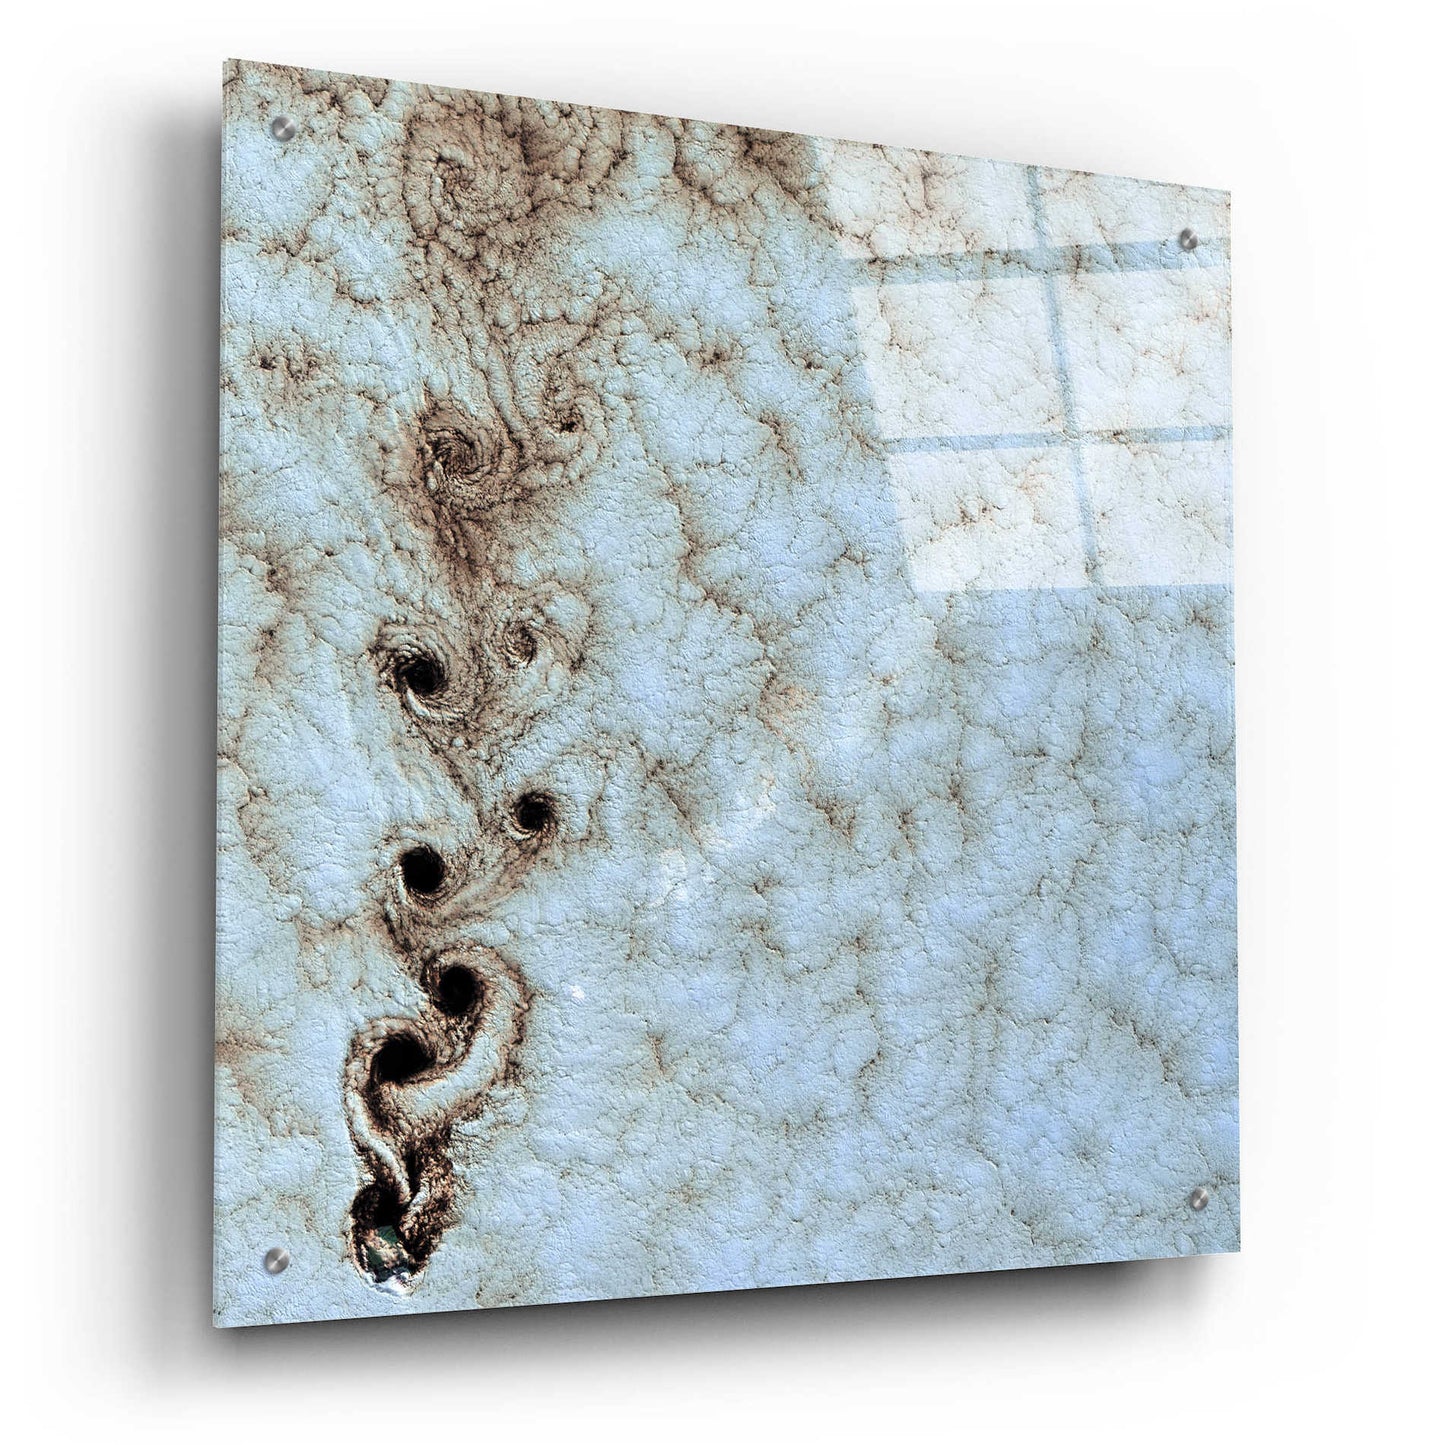 Epic Art 'Earth as Art: Karman Vortices' Acrylic Glass Wall Art,24x24